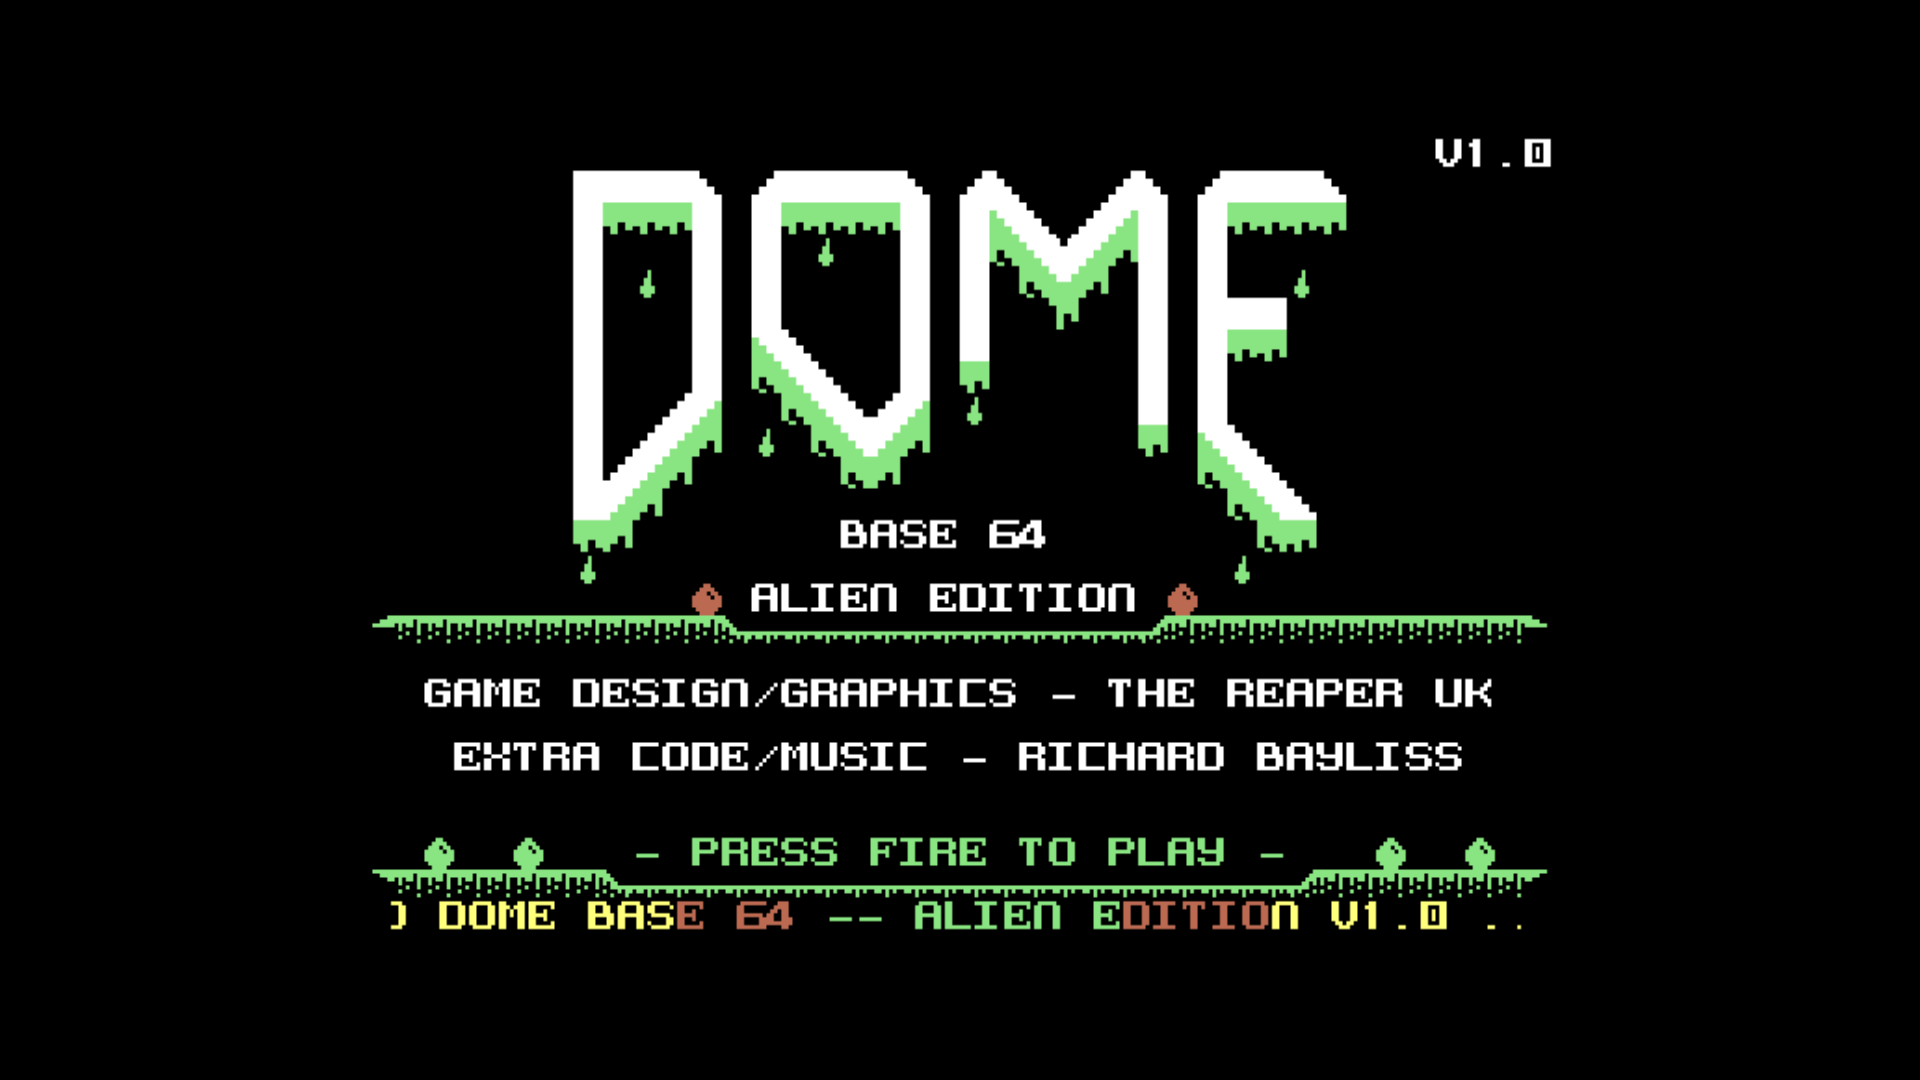 Dome Base 64 - Alien Edition (C64)